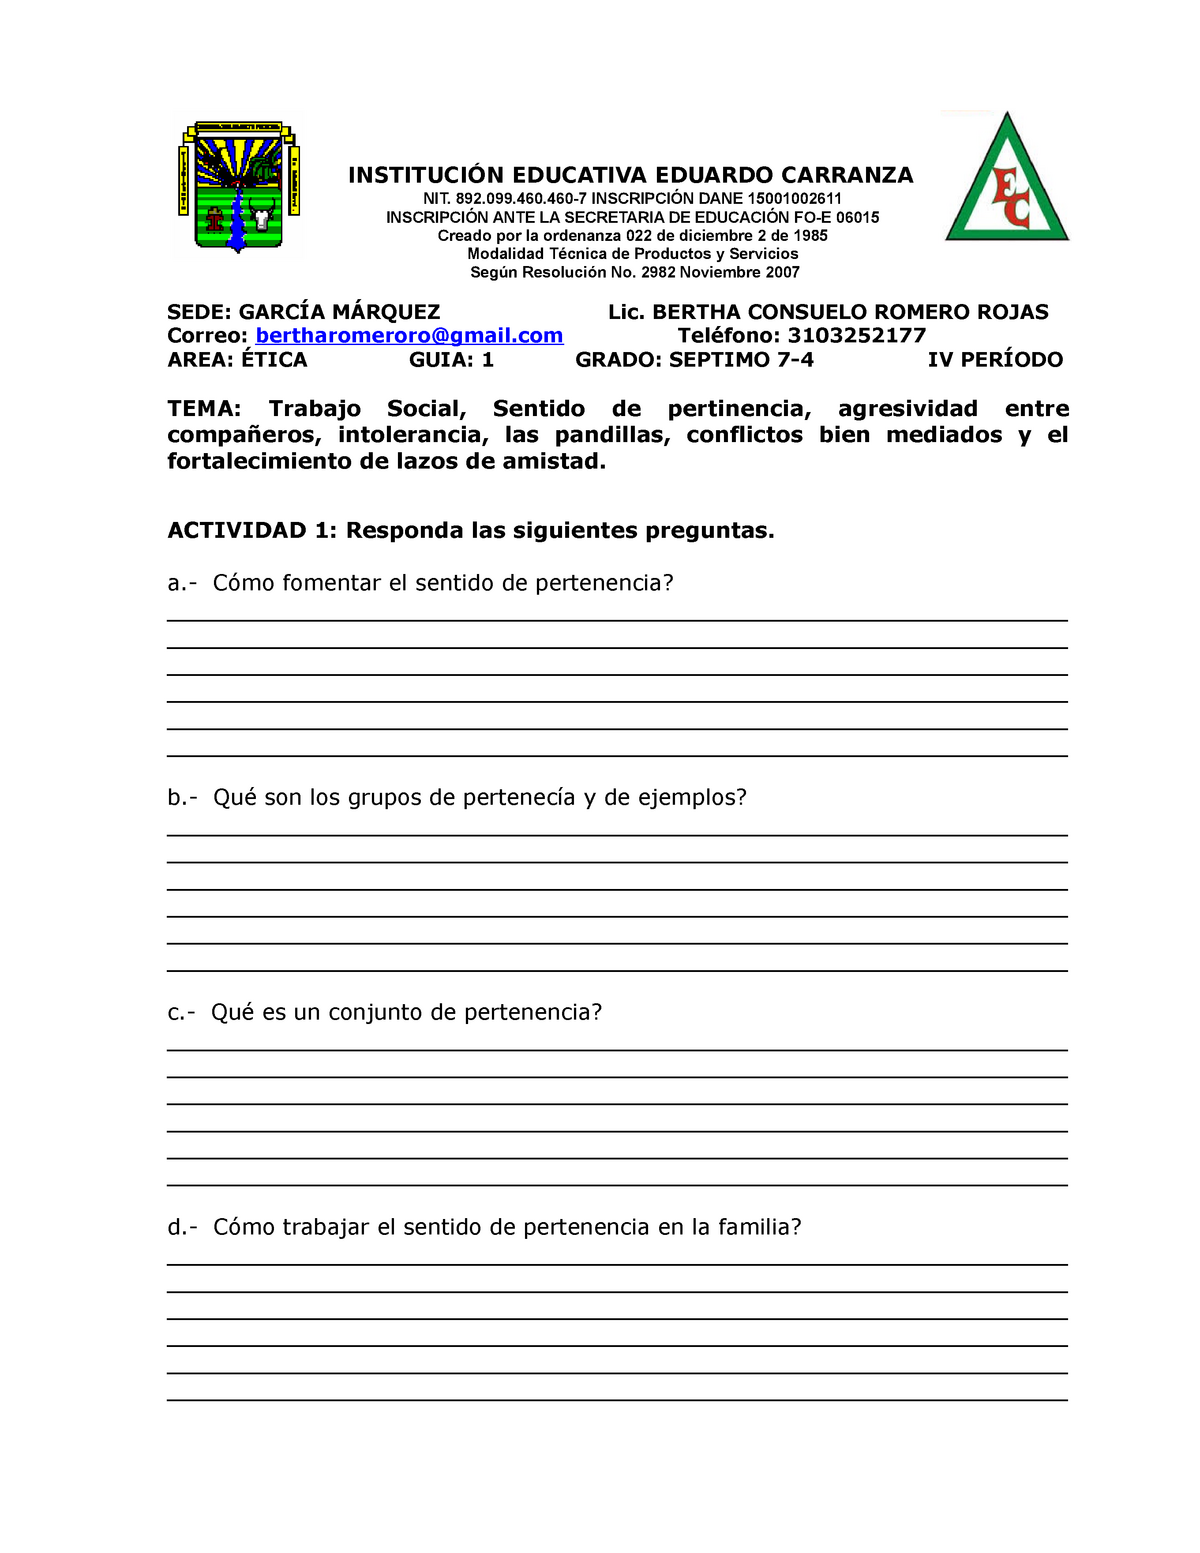 Imprimir Guia De Etica Grado 7 4 N° 1 Iv Periodo InstituciÓn Educativa Eduardo Carranza Nit 6692